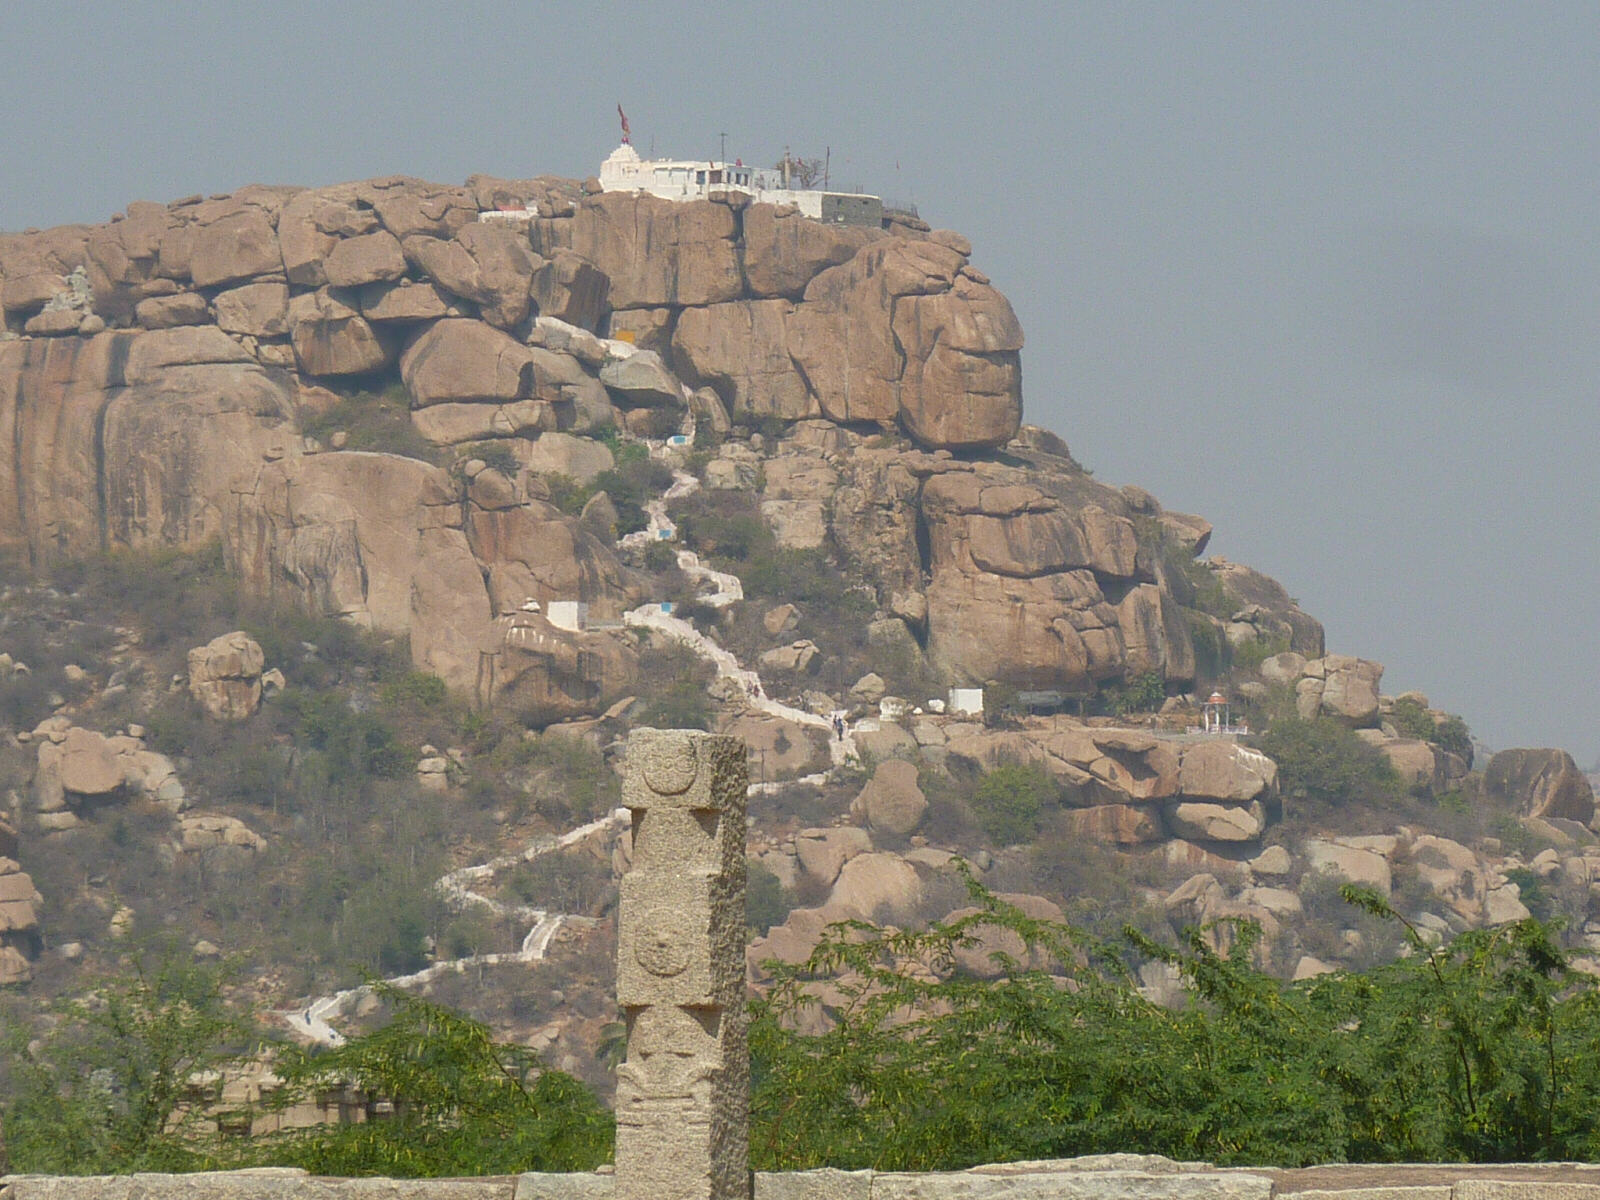 Hanuman temple on a hill in Hampi, India